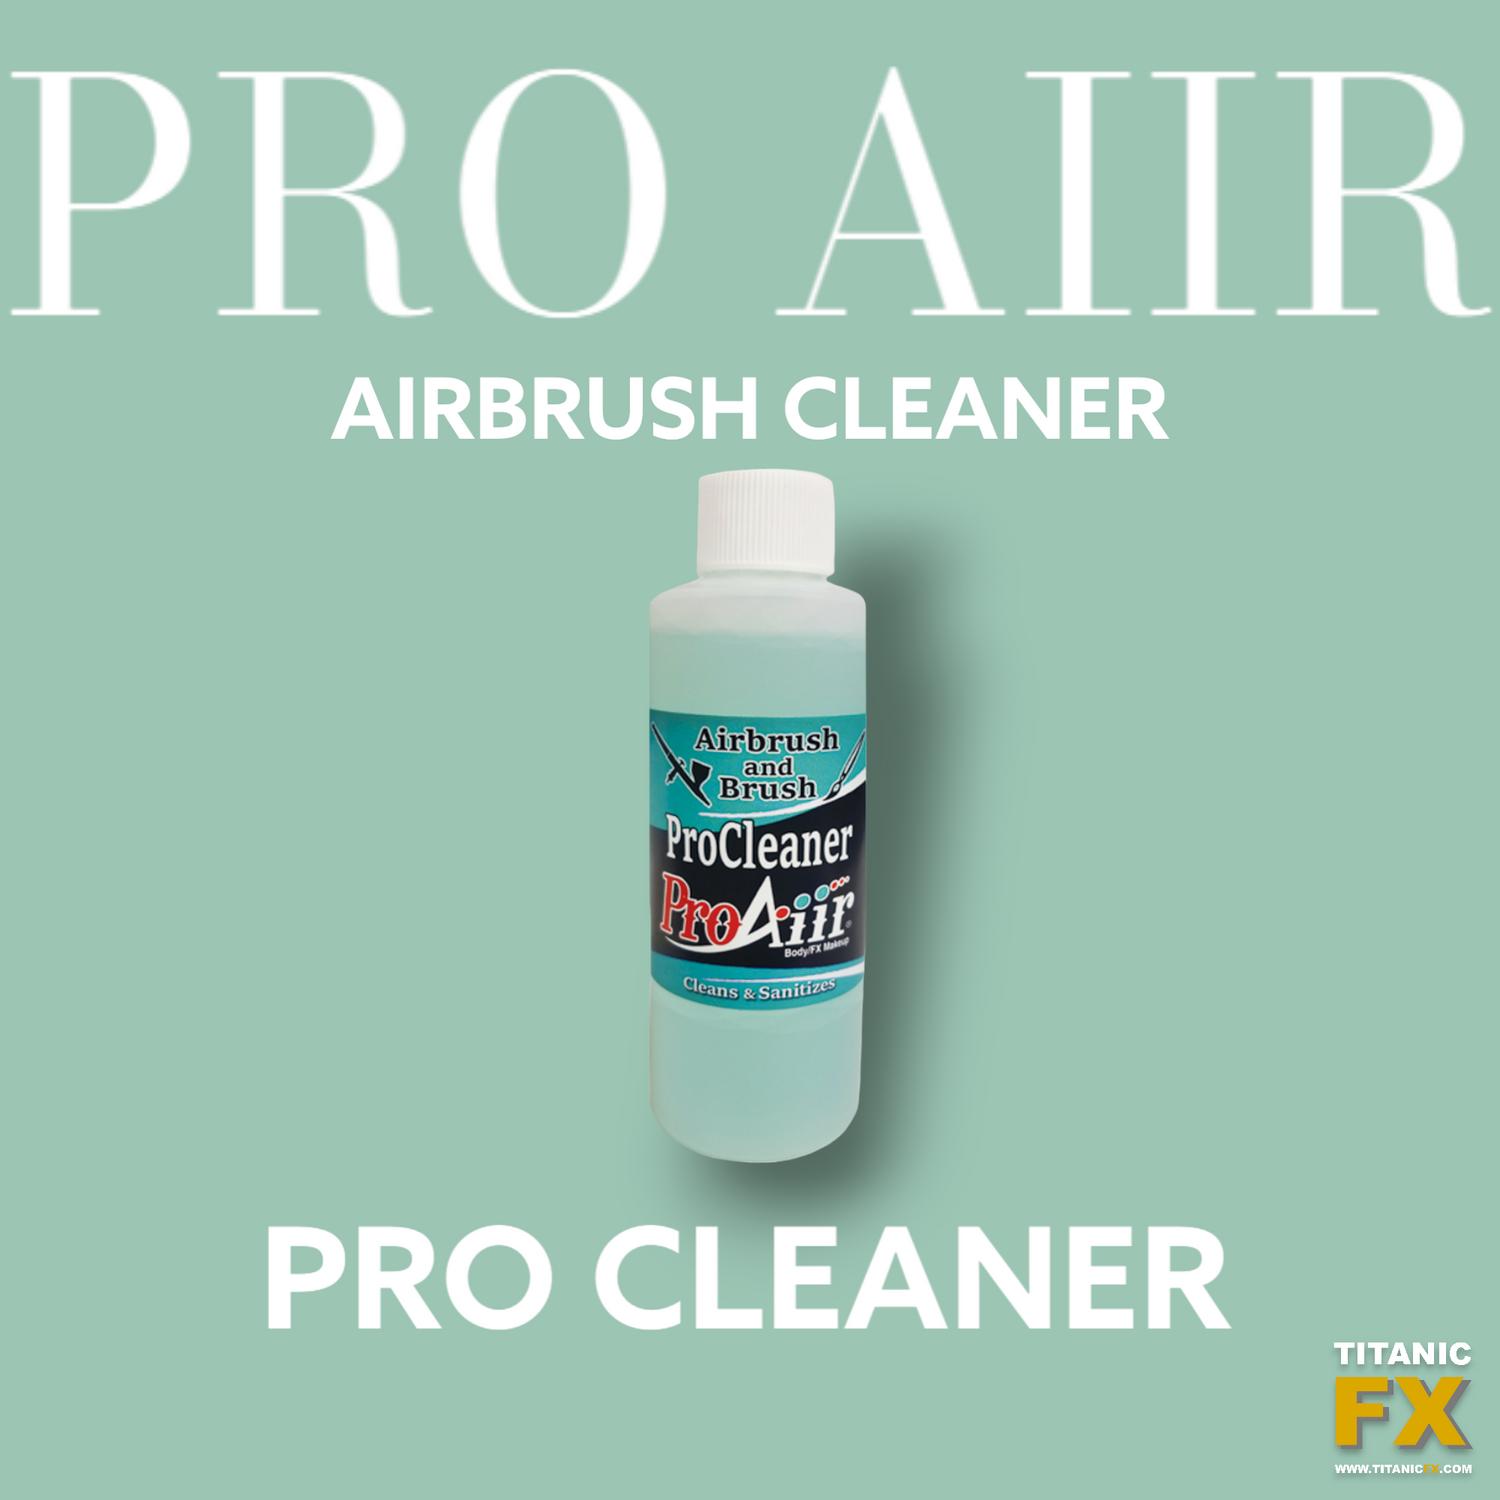 Pro Aiir  - ProCleaner - Airbrush & Brush Cleaner (4oz / 120ml)